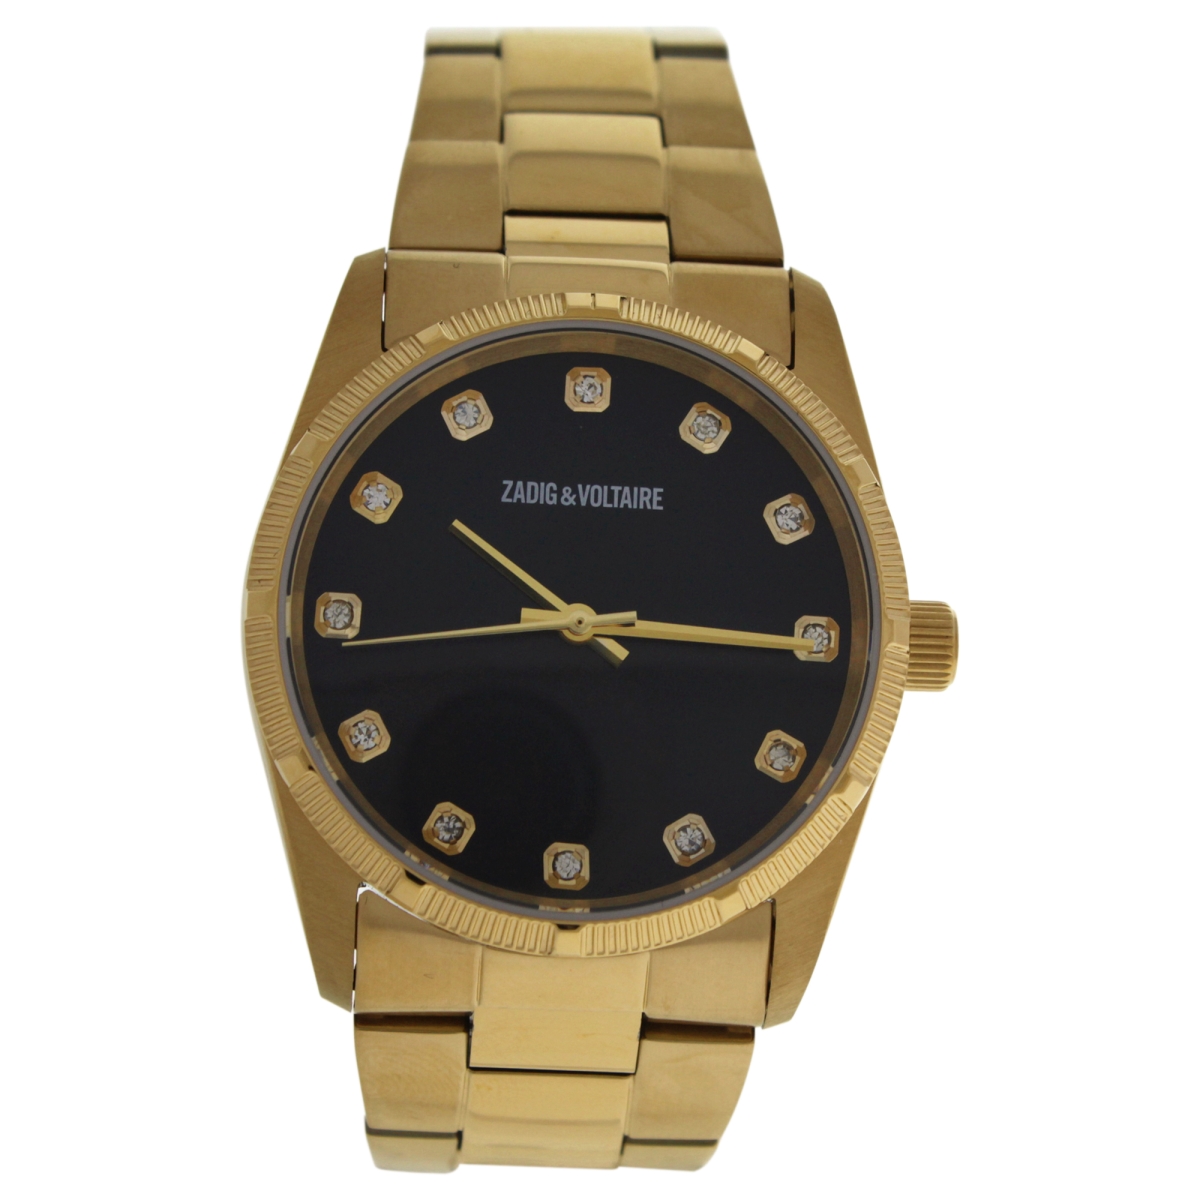 U-wat-1058 Zvf221 Gold Stainless Steel Bracelet Watch For Unisex - Black Dial